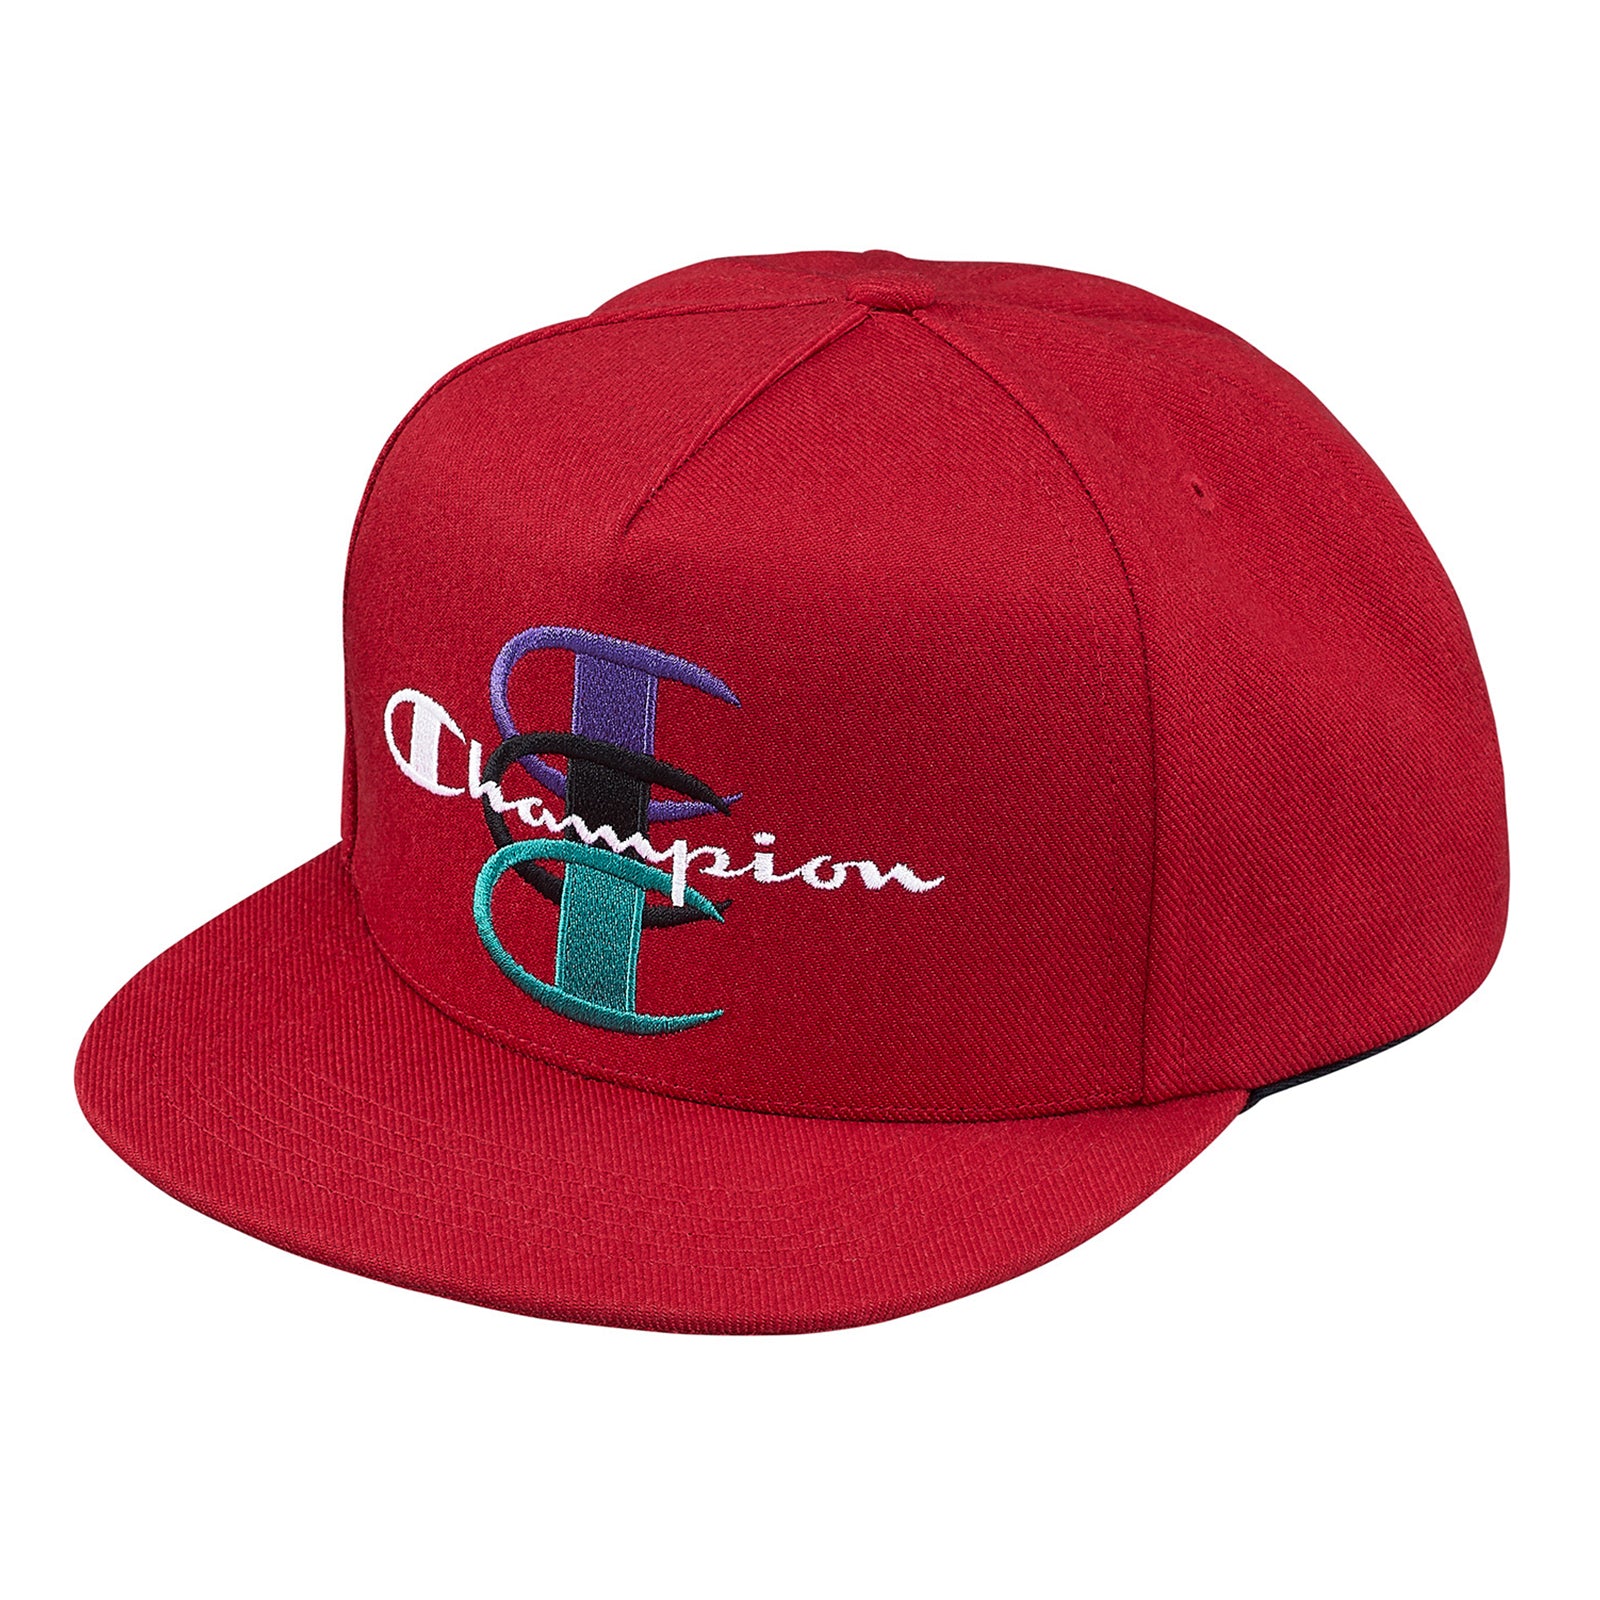 Supreme/ Champion 5-panel hat Red